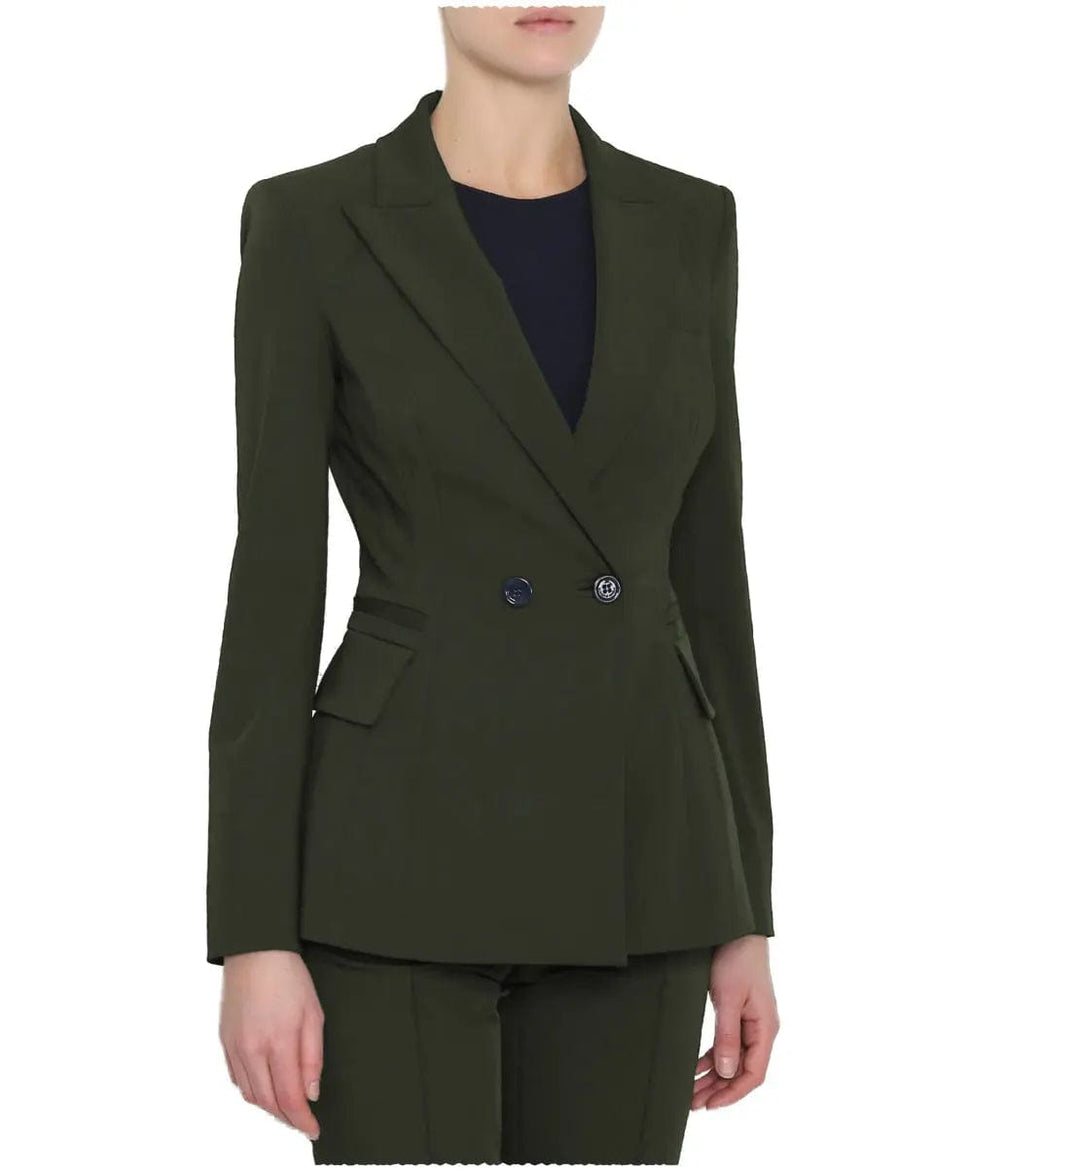 solovedress Business Formal Flat Peak Lapel Blazer 2 Pieces Women Suit